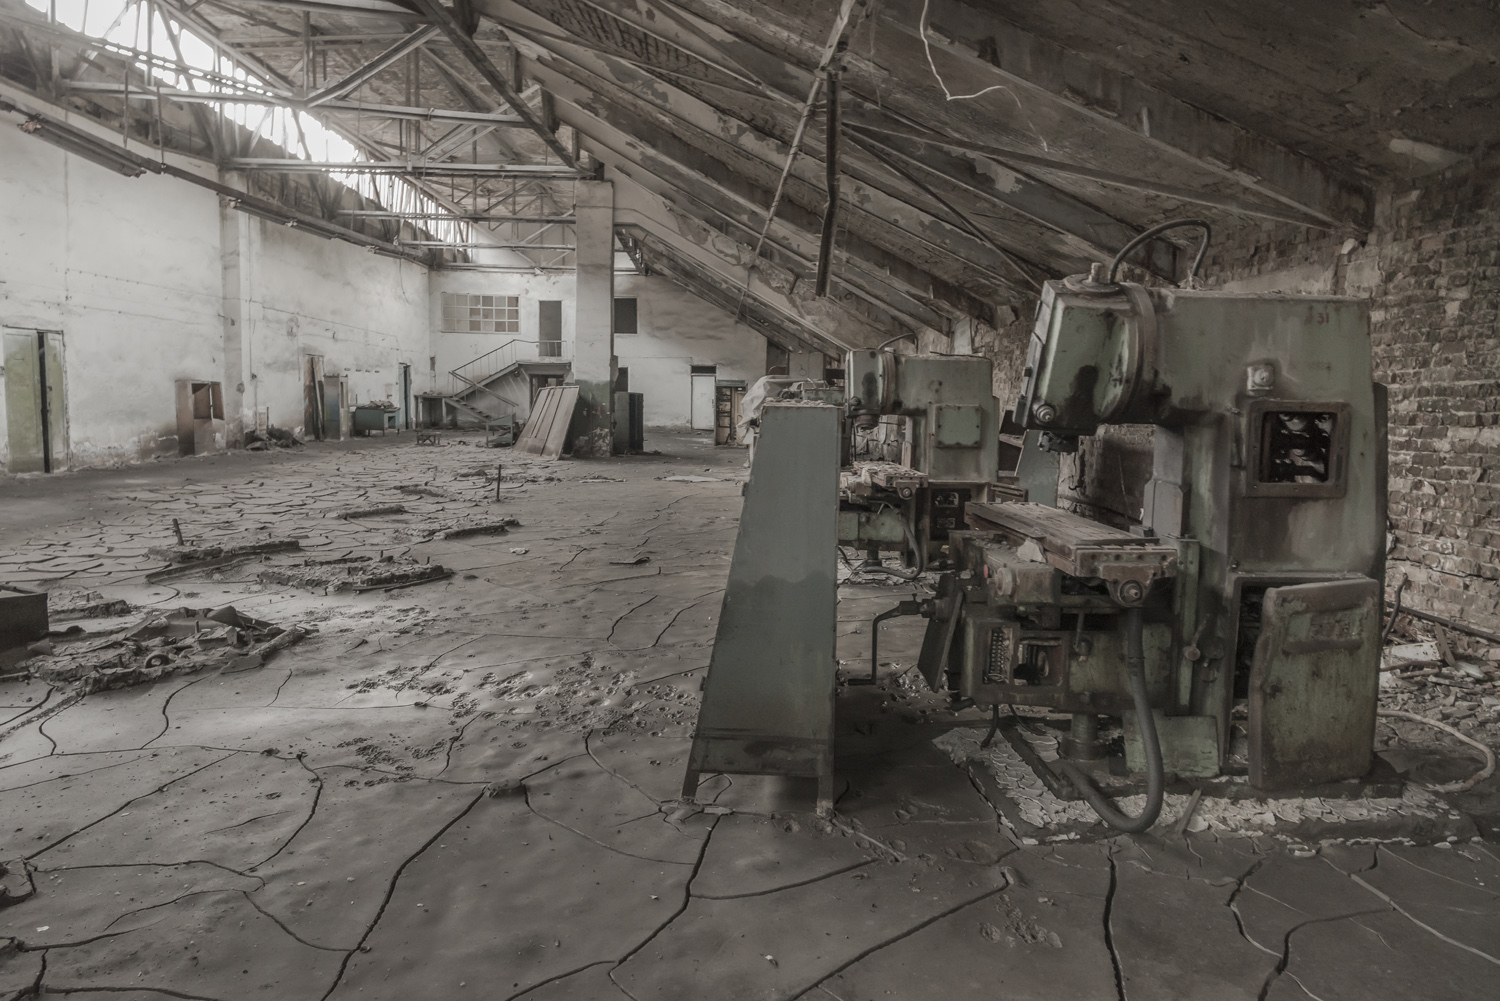 min-kush-soviet-uranium-mining-town-industrial-Russia-Kyrgyzstan-ruins-soviet-sign-jo-kearney-photos-video-photography-factory-interior-machines.jpg